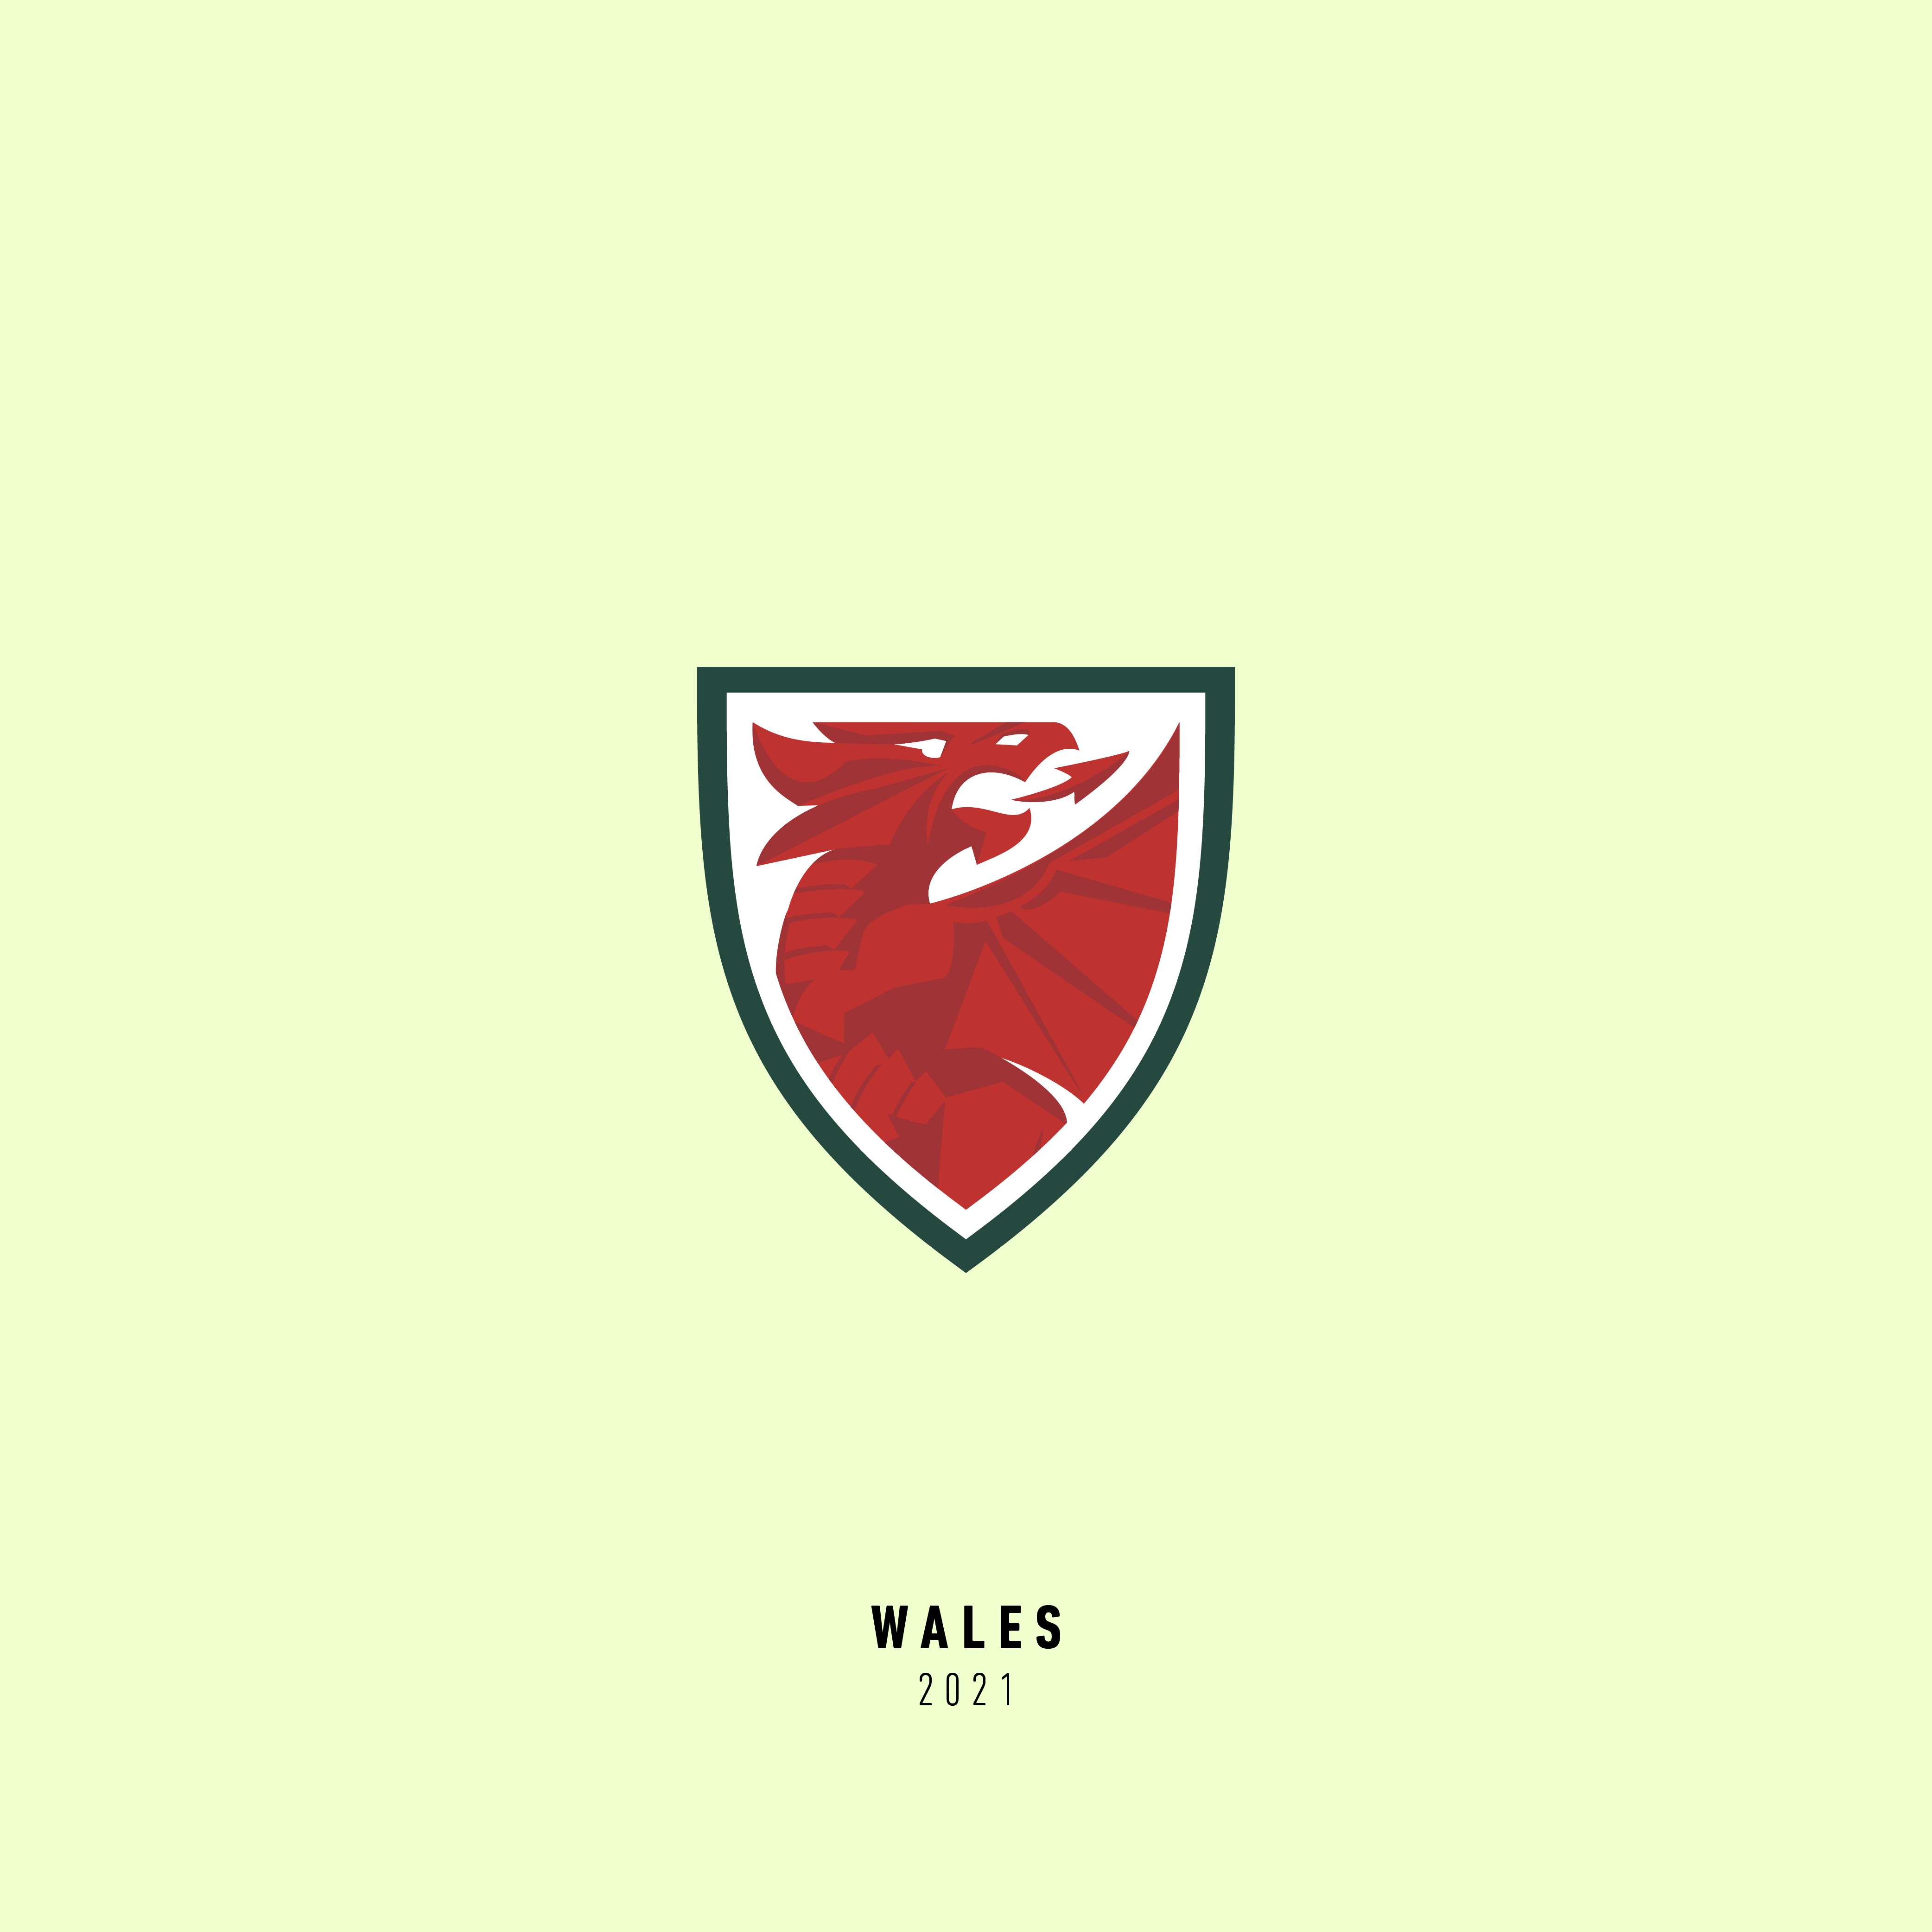 Euro2021 Wales 2021 1 1